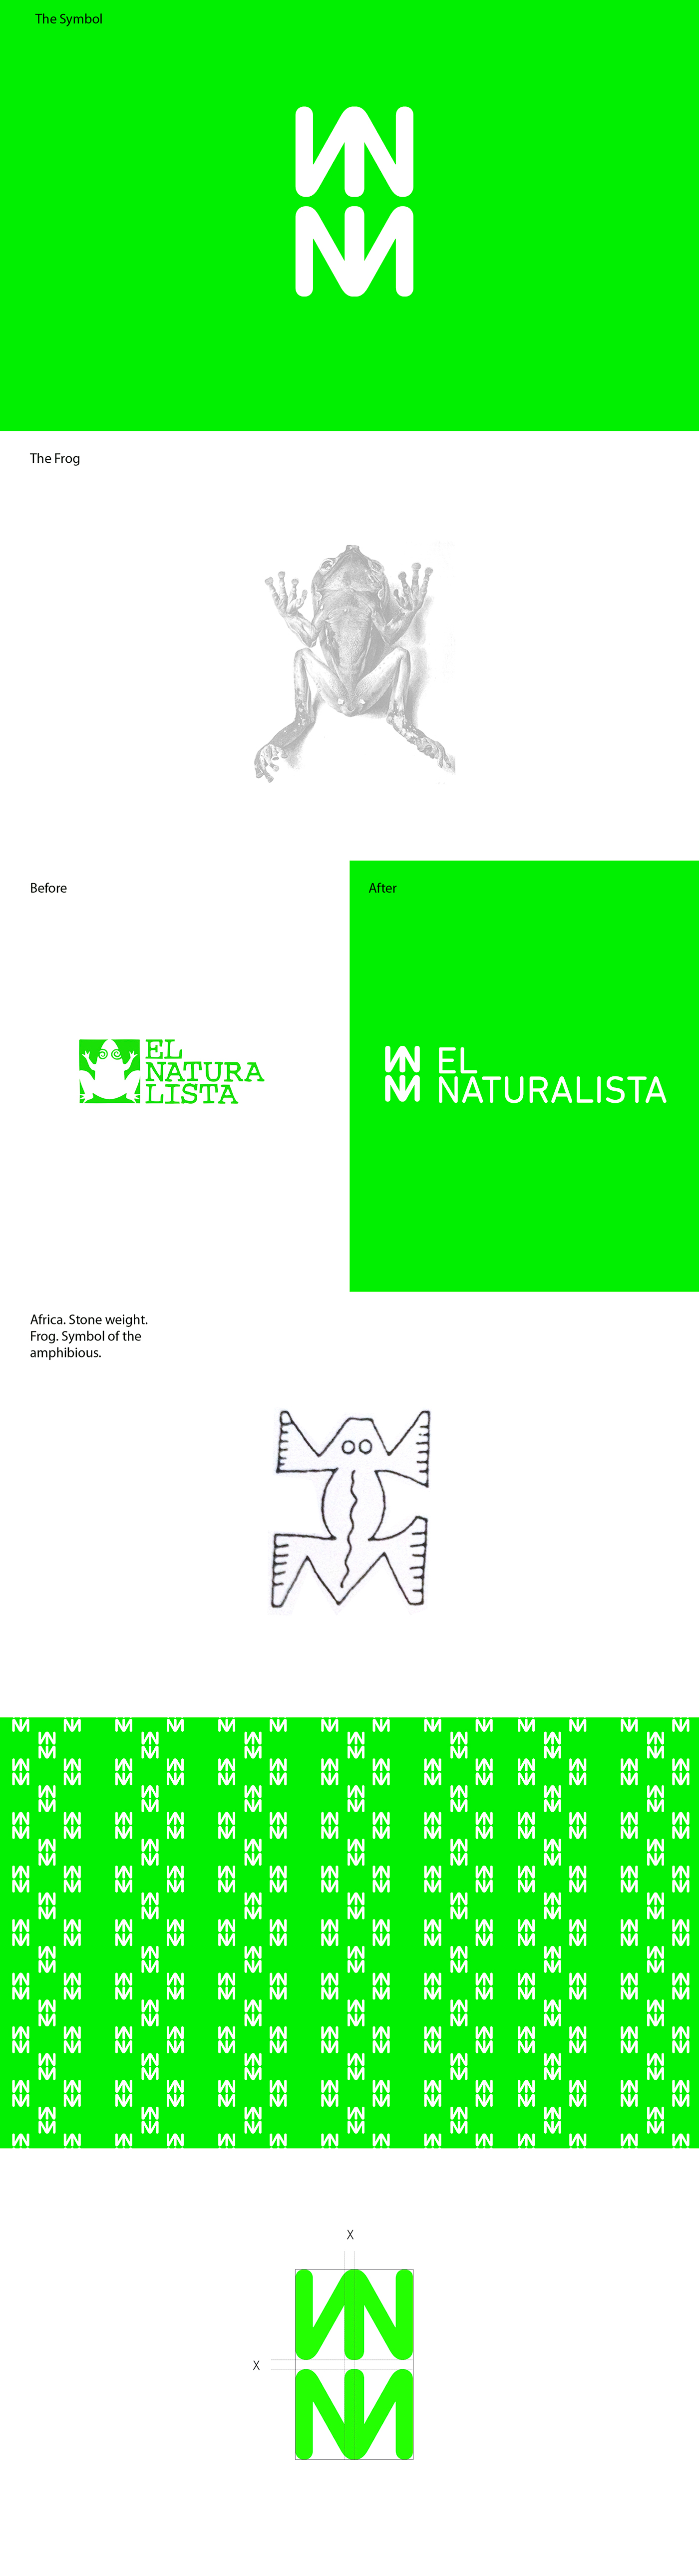 frogs shoes zapatos elnaturalista brand rediseño Verde green logo Logotipo redesign ecobrands